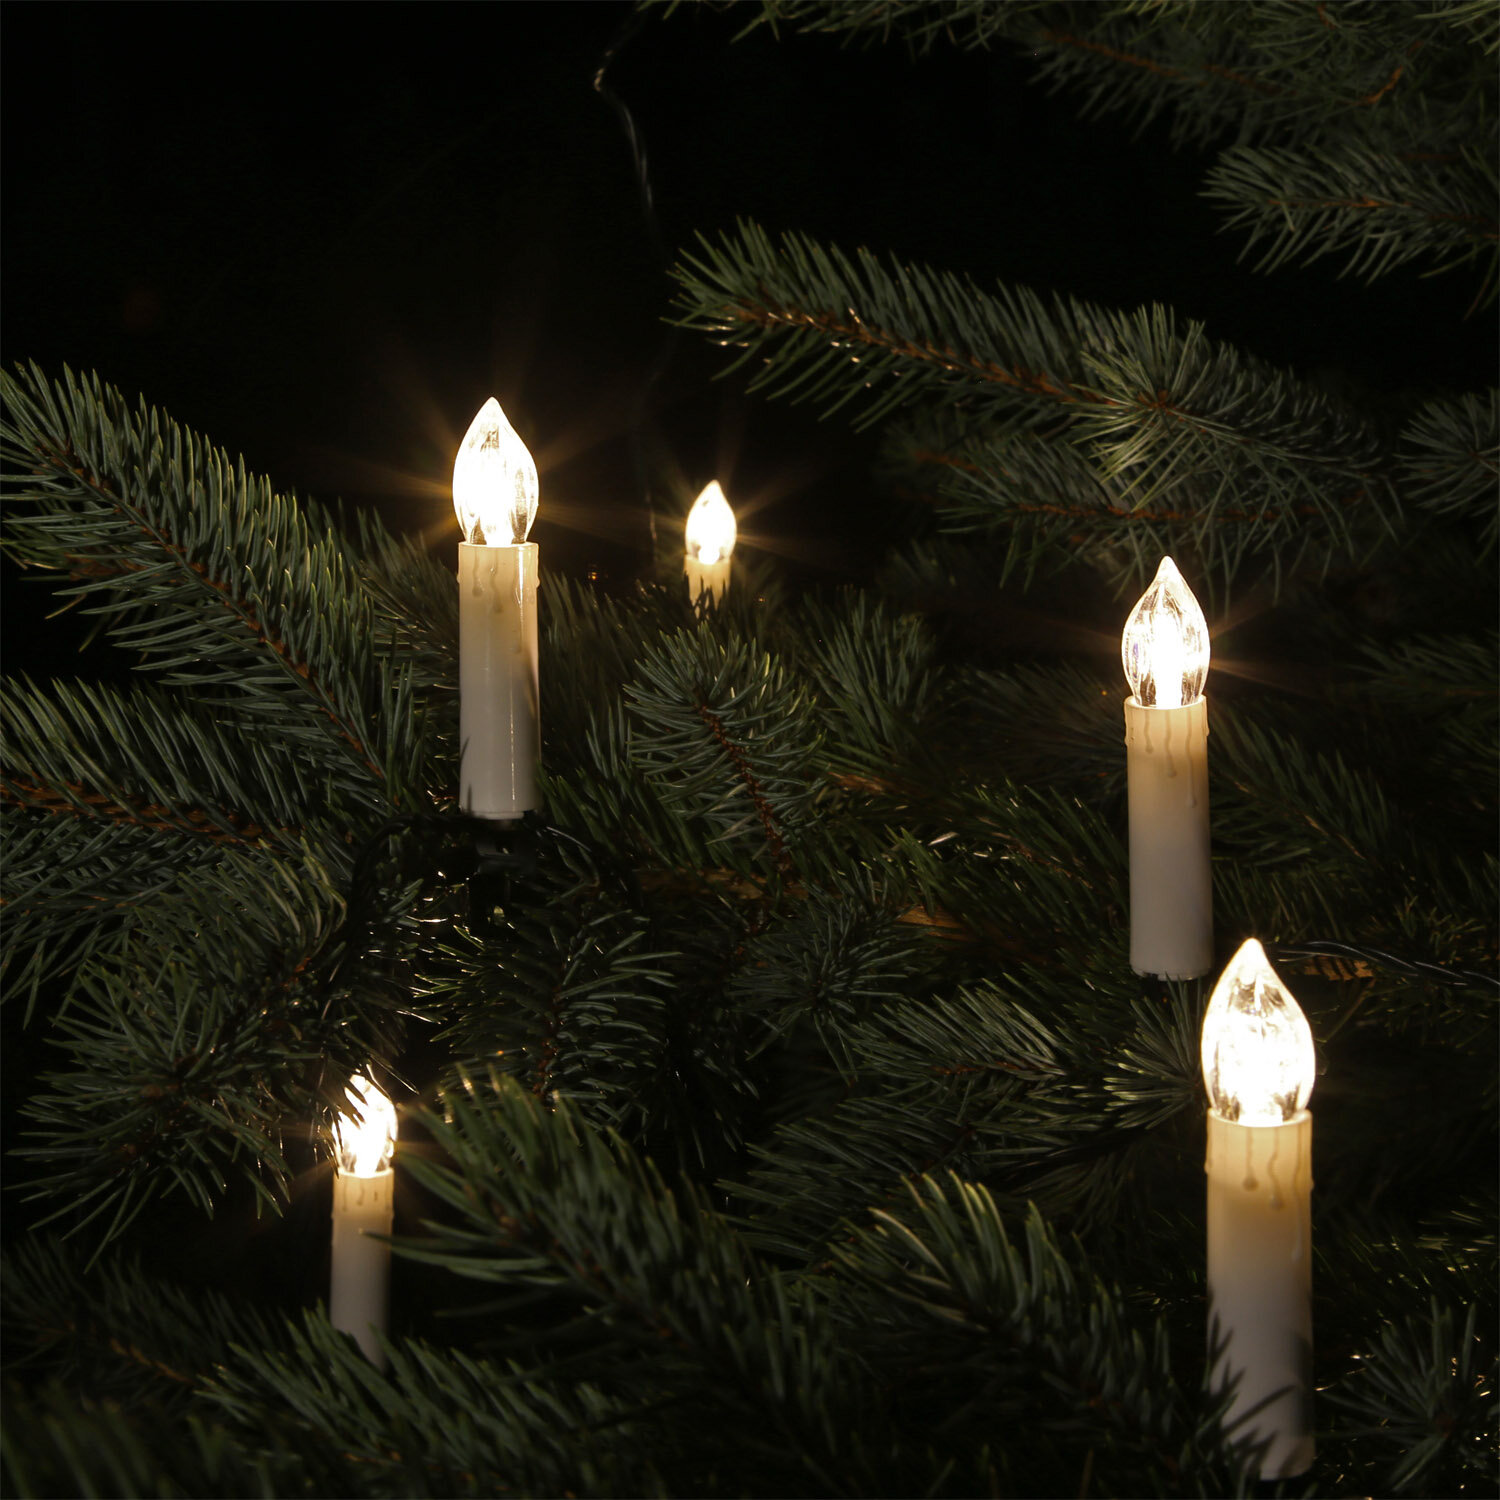 Kerzenlichterkette mit geraden Kerzen am Baum